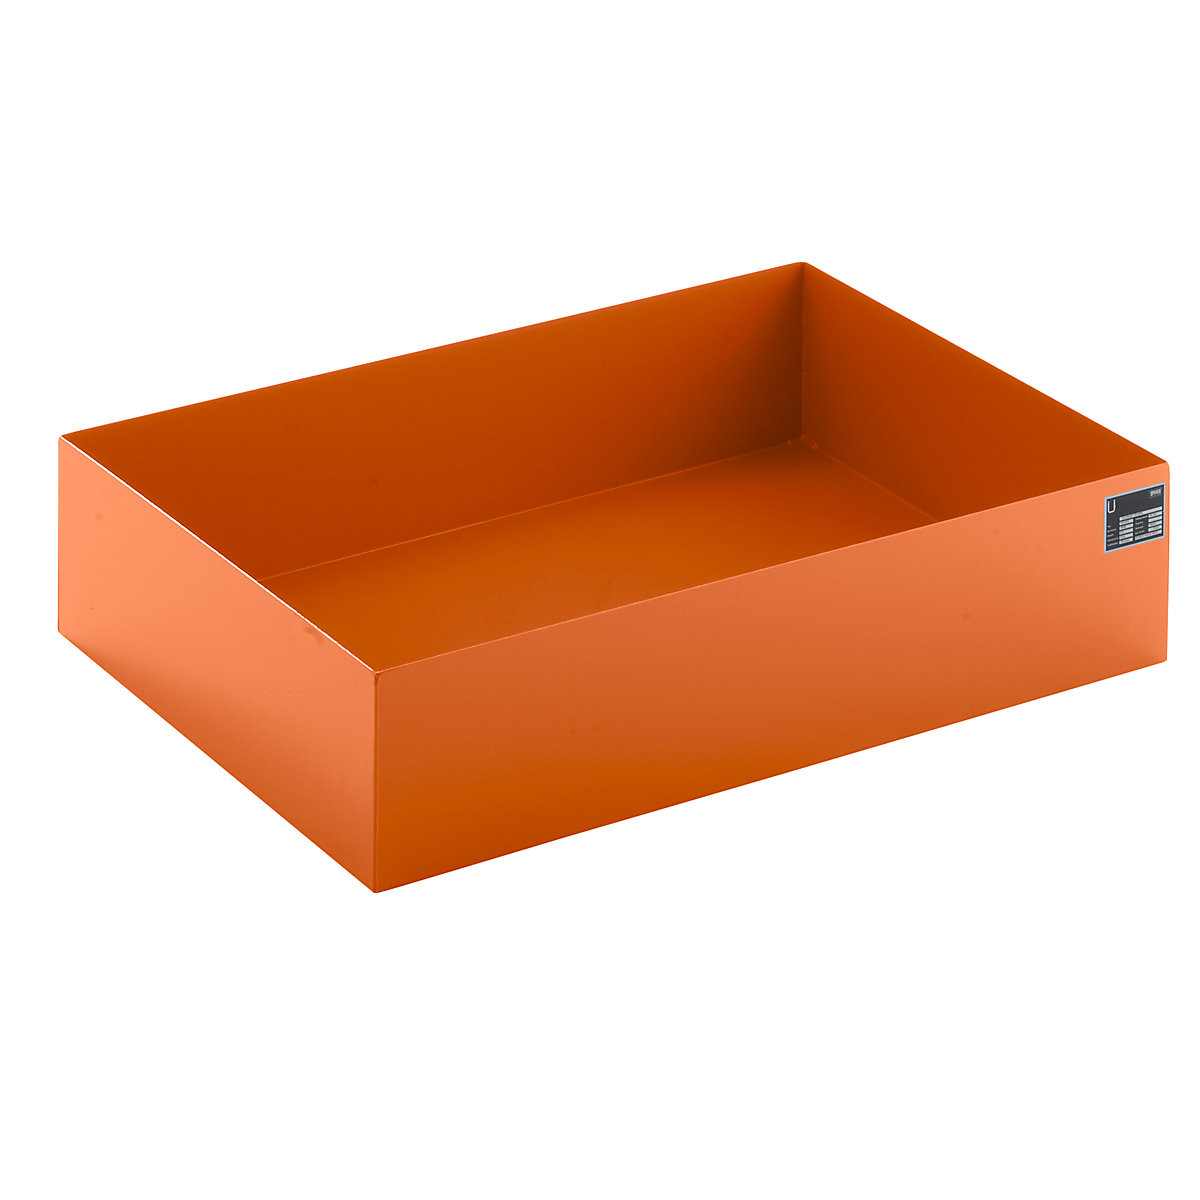 EUROKRAFTbasic – Pallet sump tray, LxWxH 1200 x 800 x 260 mm, orange RAL 2000